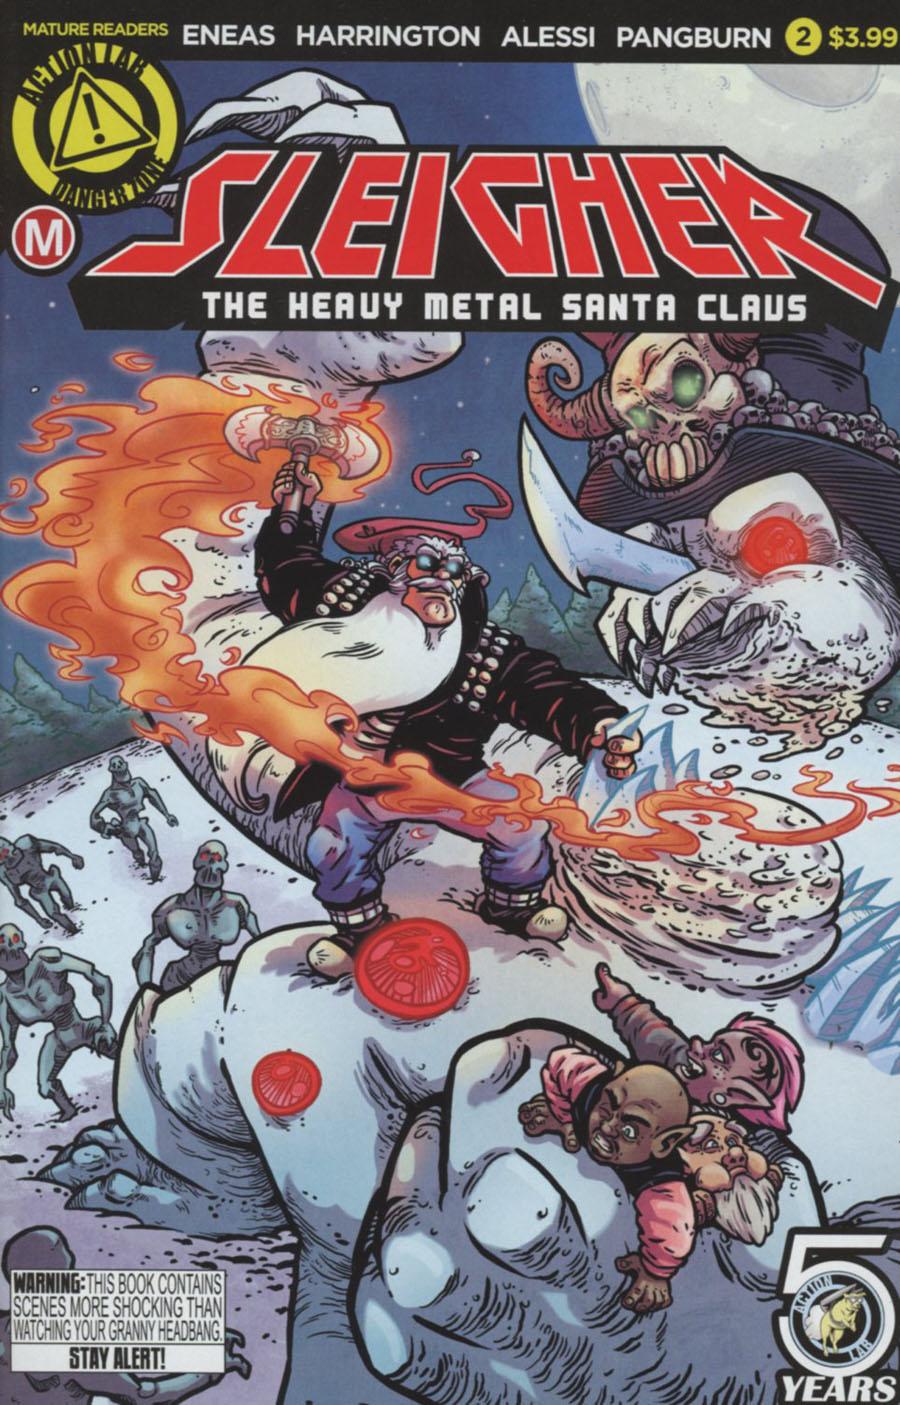 Sleigher Heavy Metal Santa Claus Vol. 1 #2